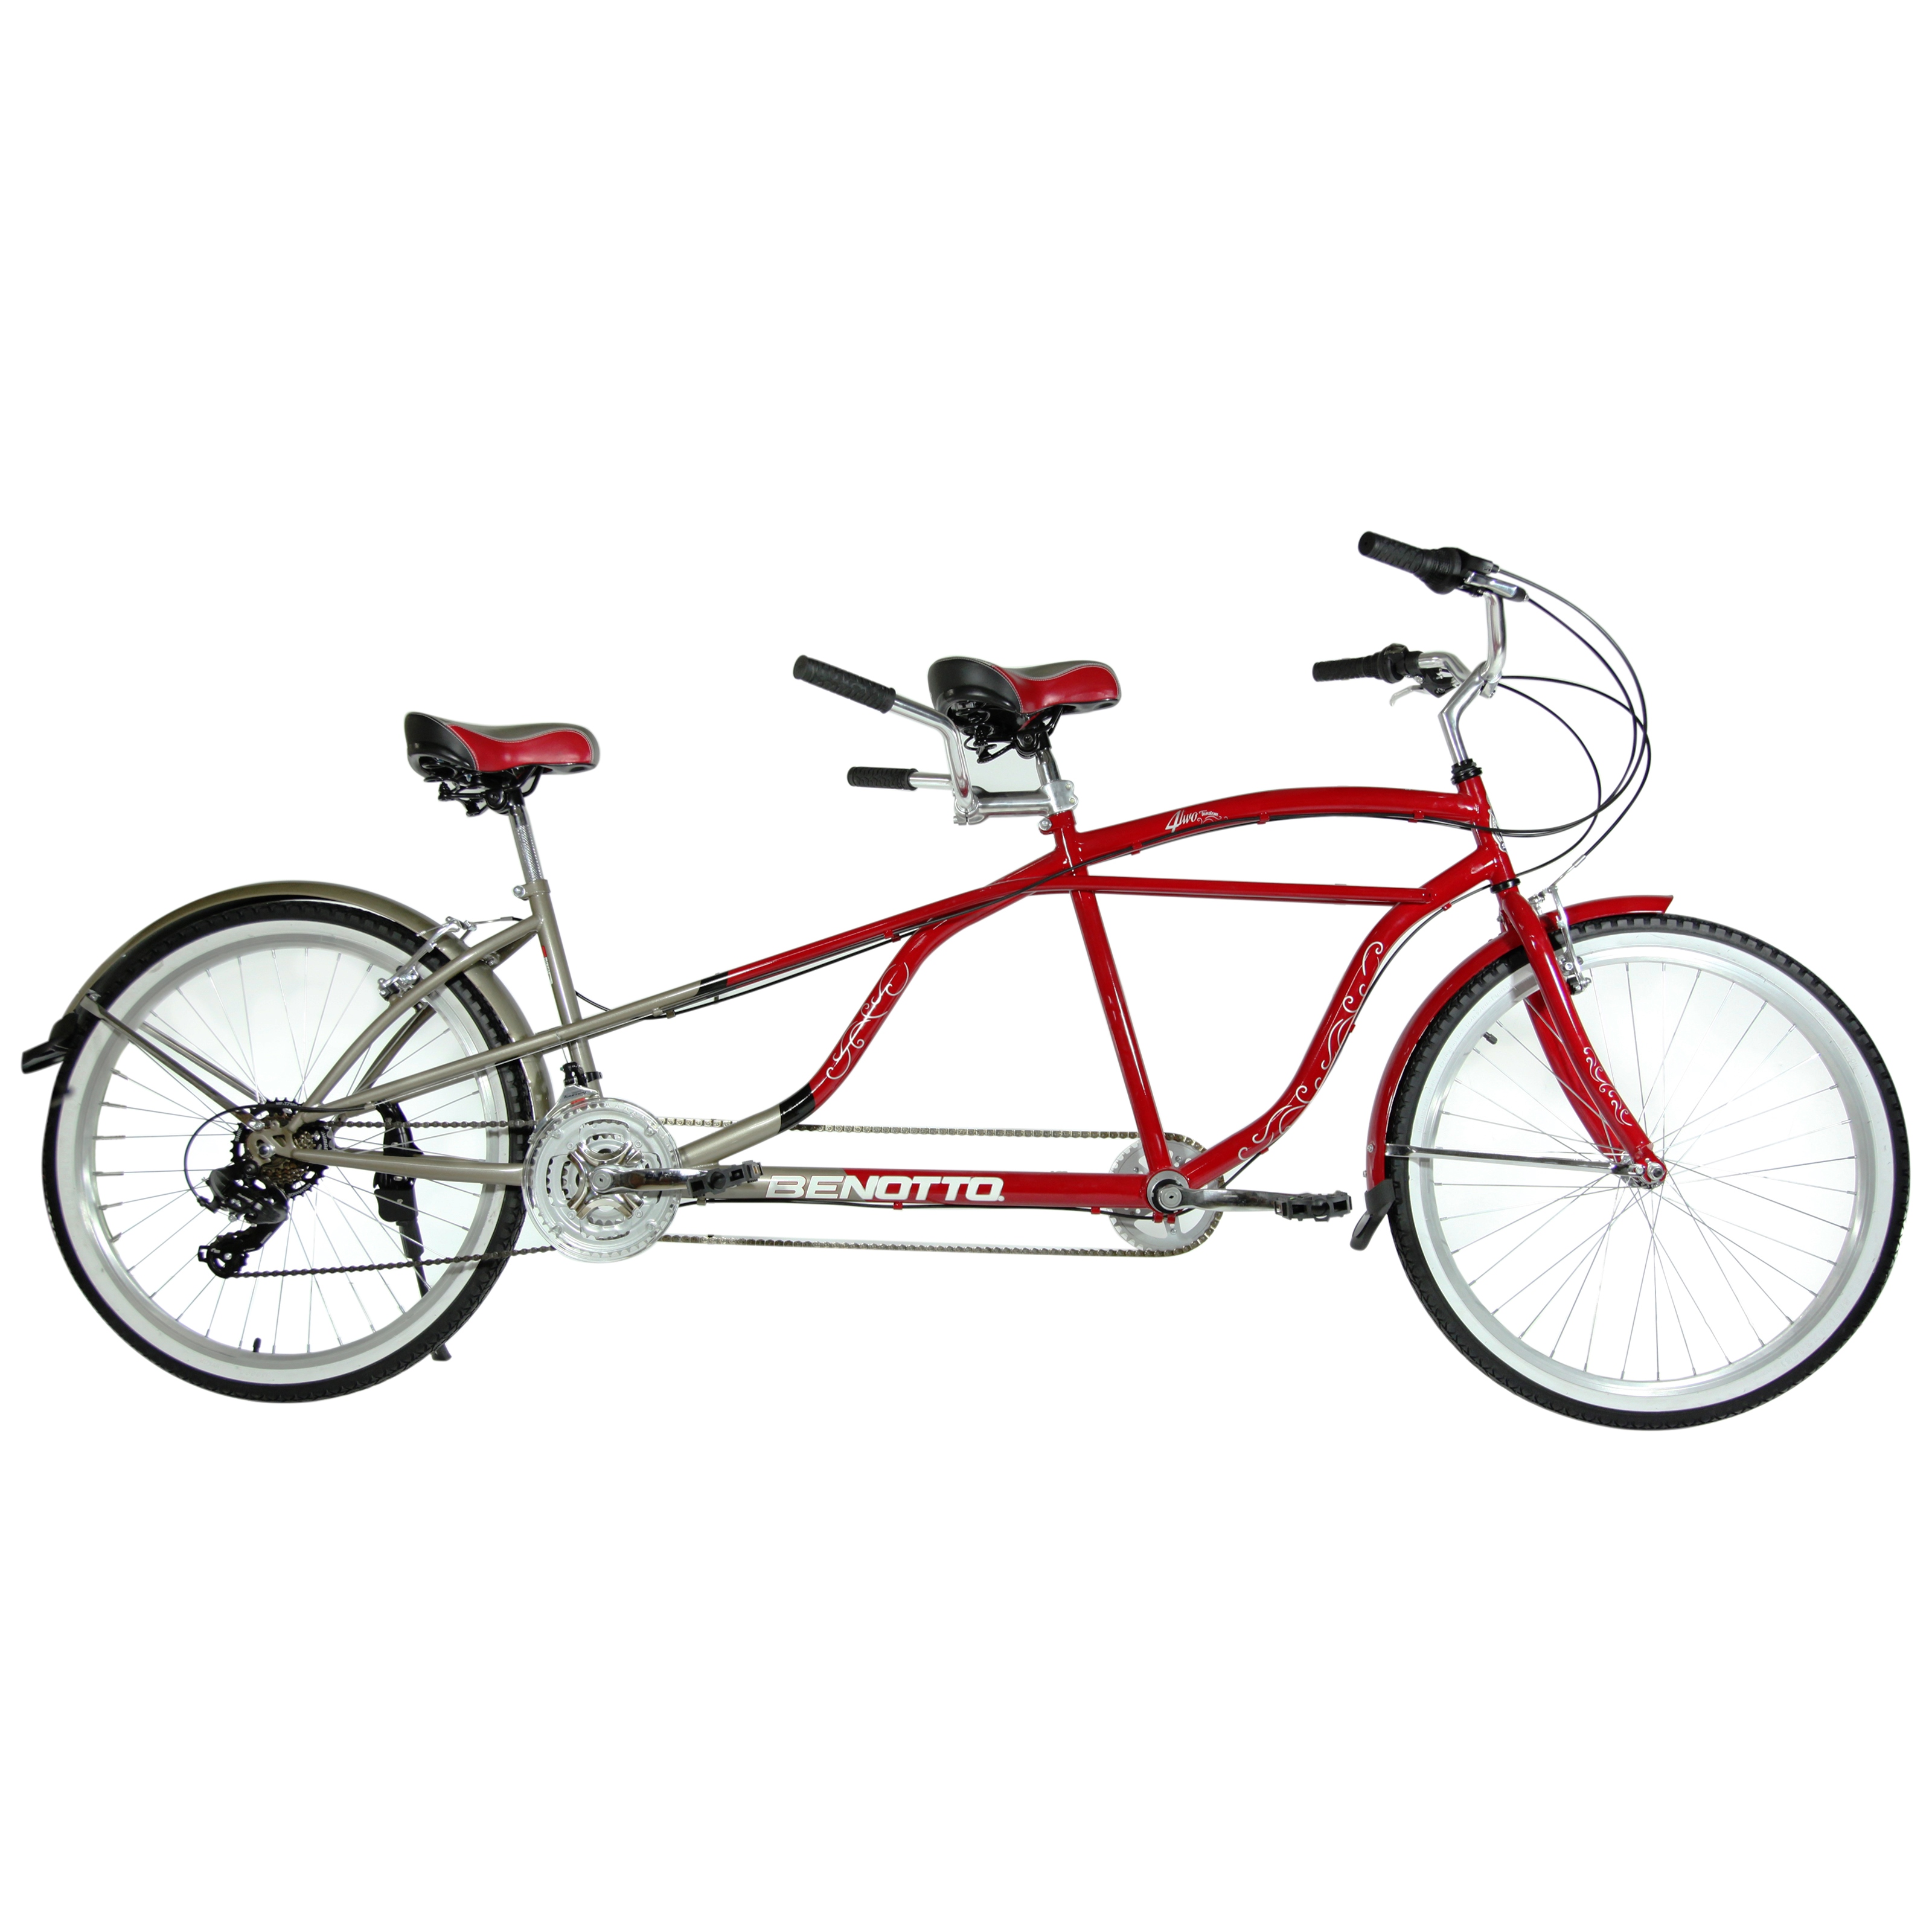 Se vende bicicleta tándem nueva